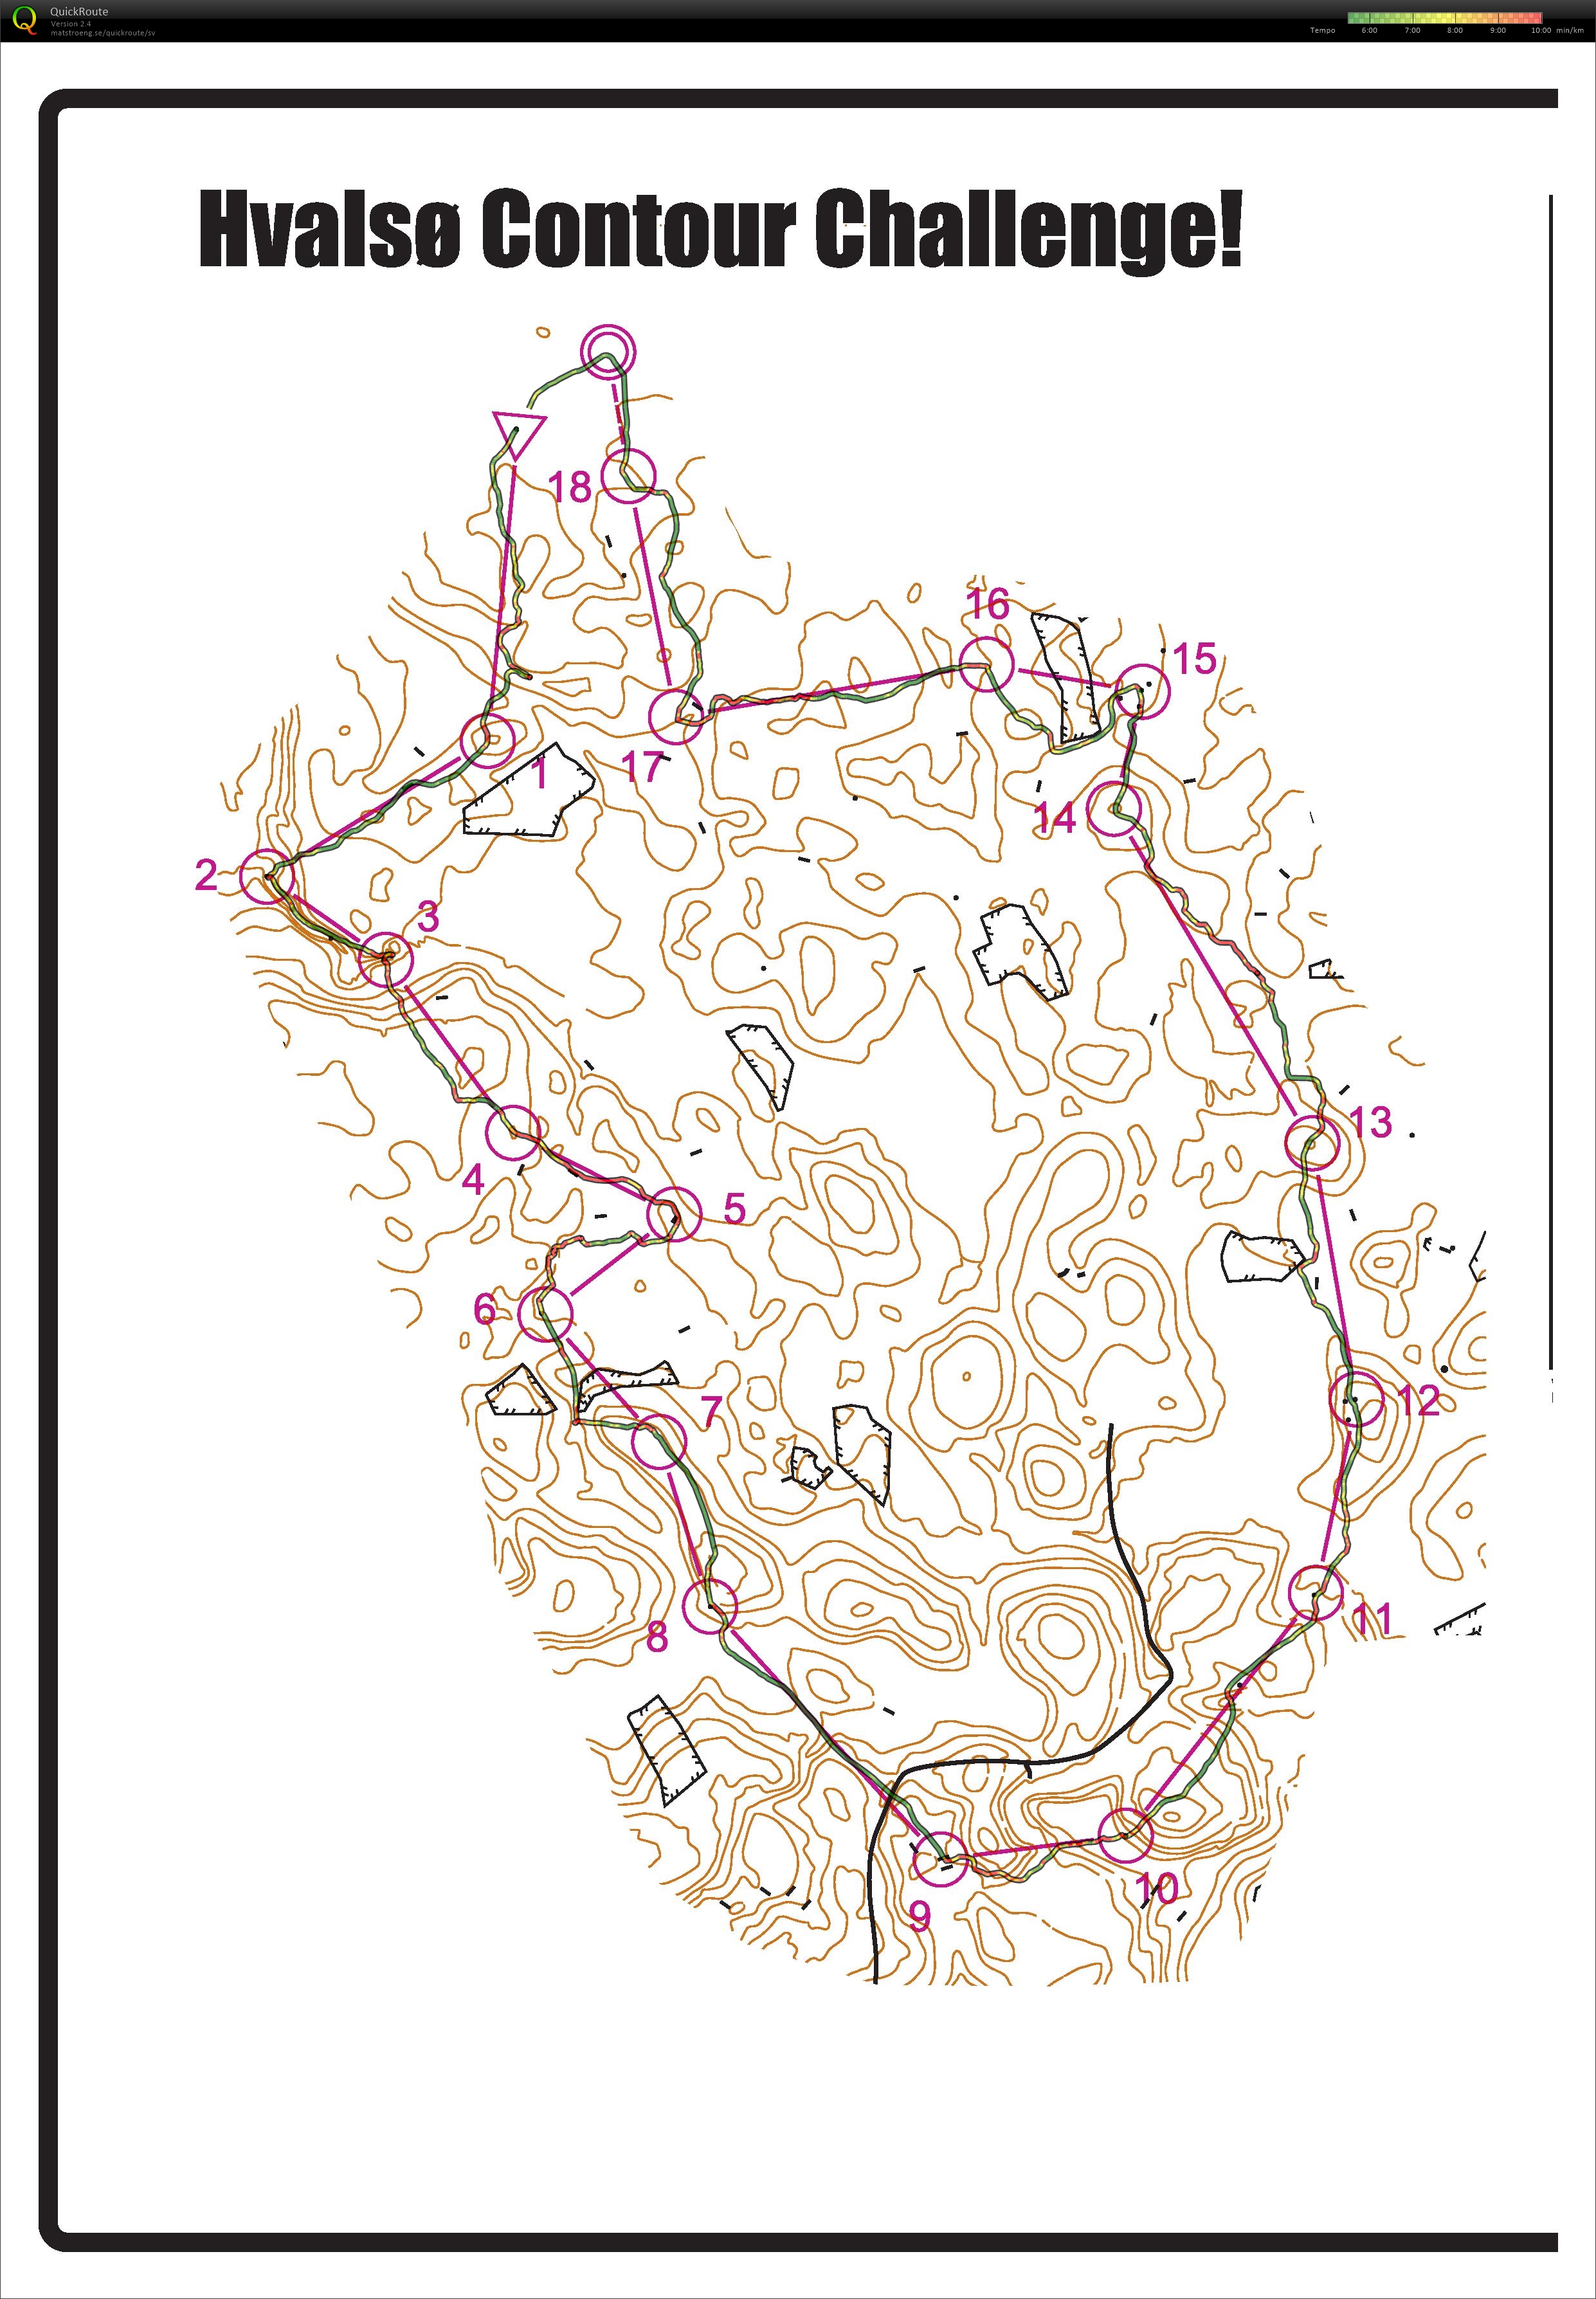 Hvalsø contour challenge (18.02.2017)